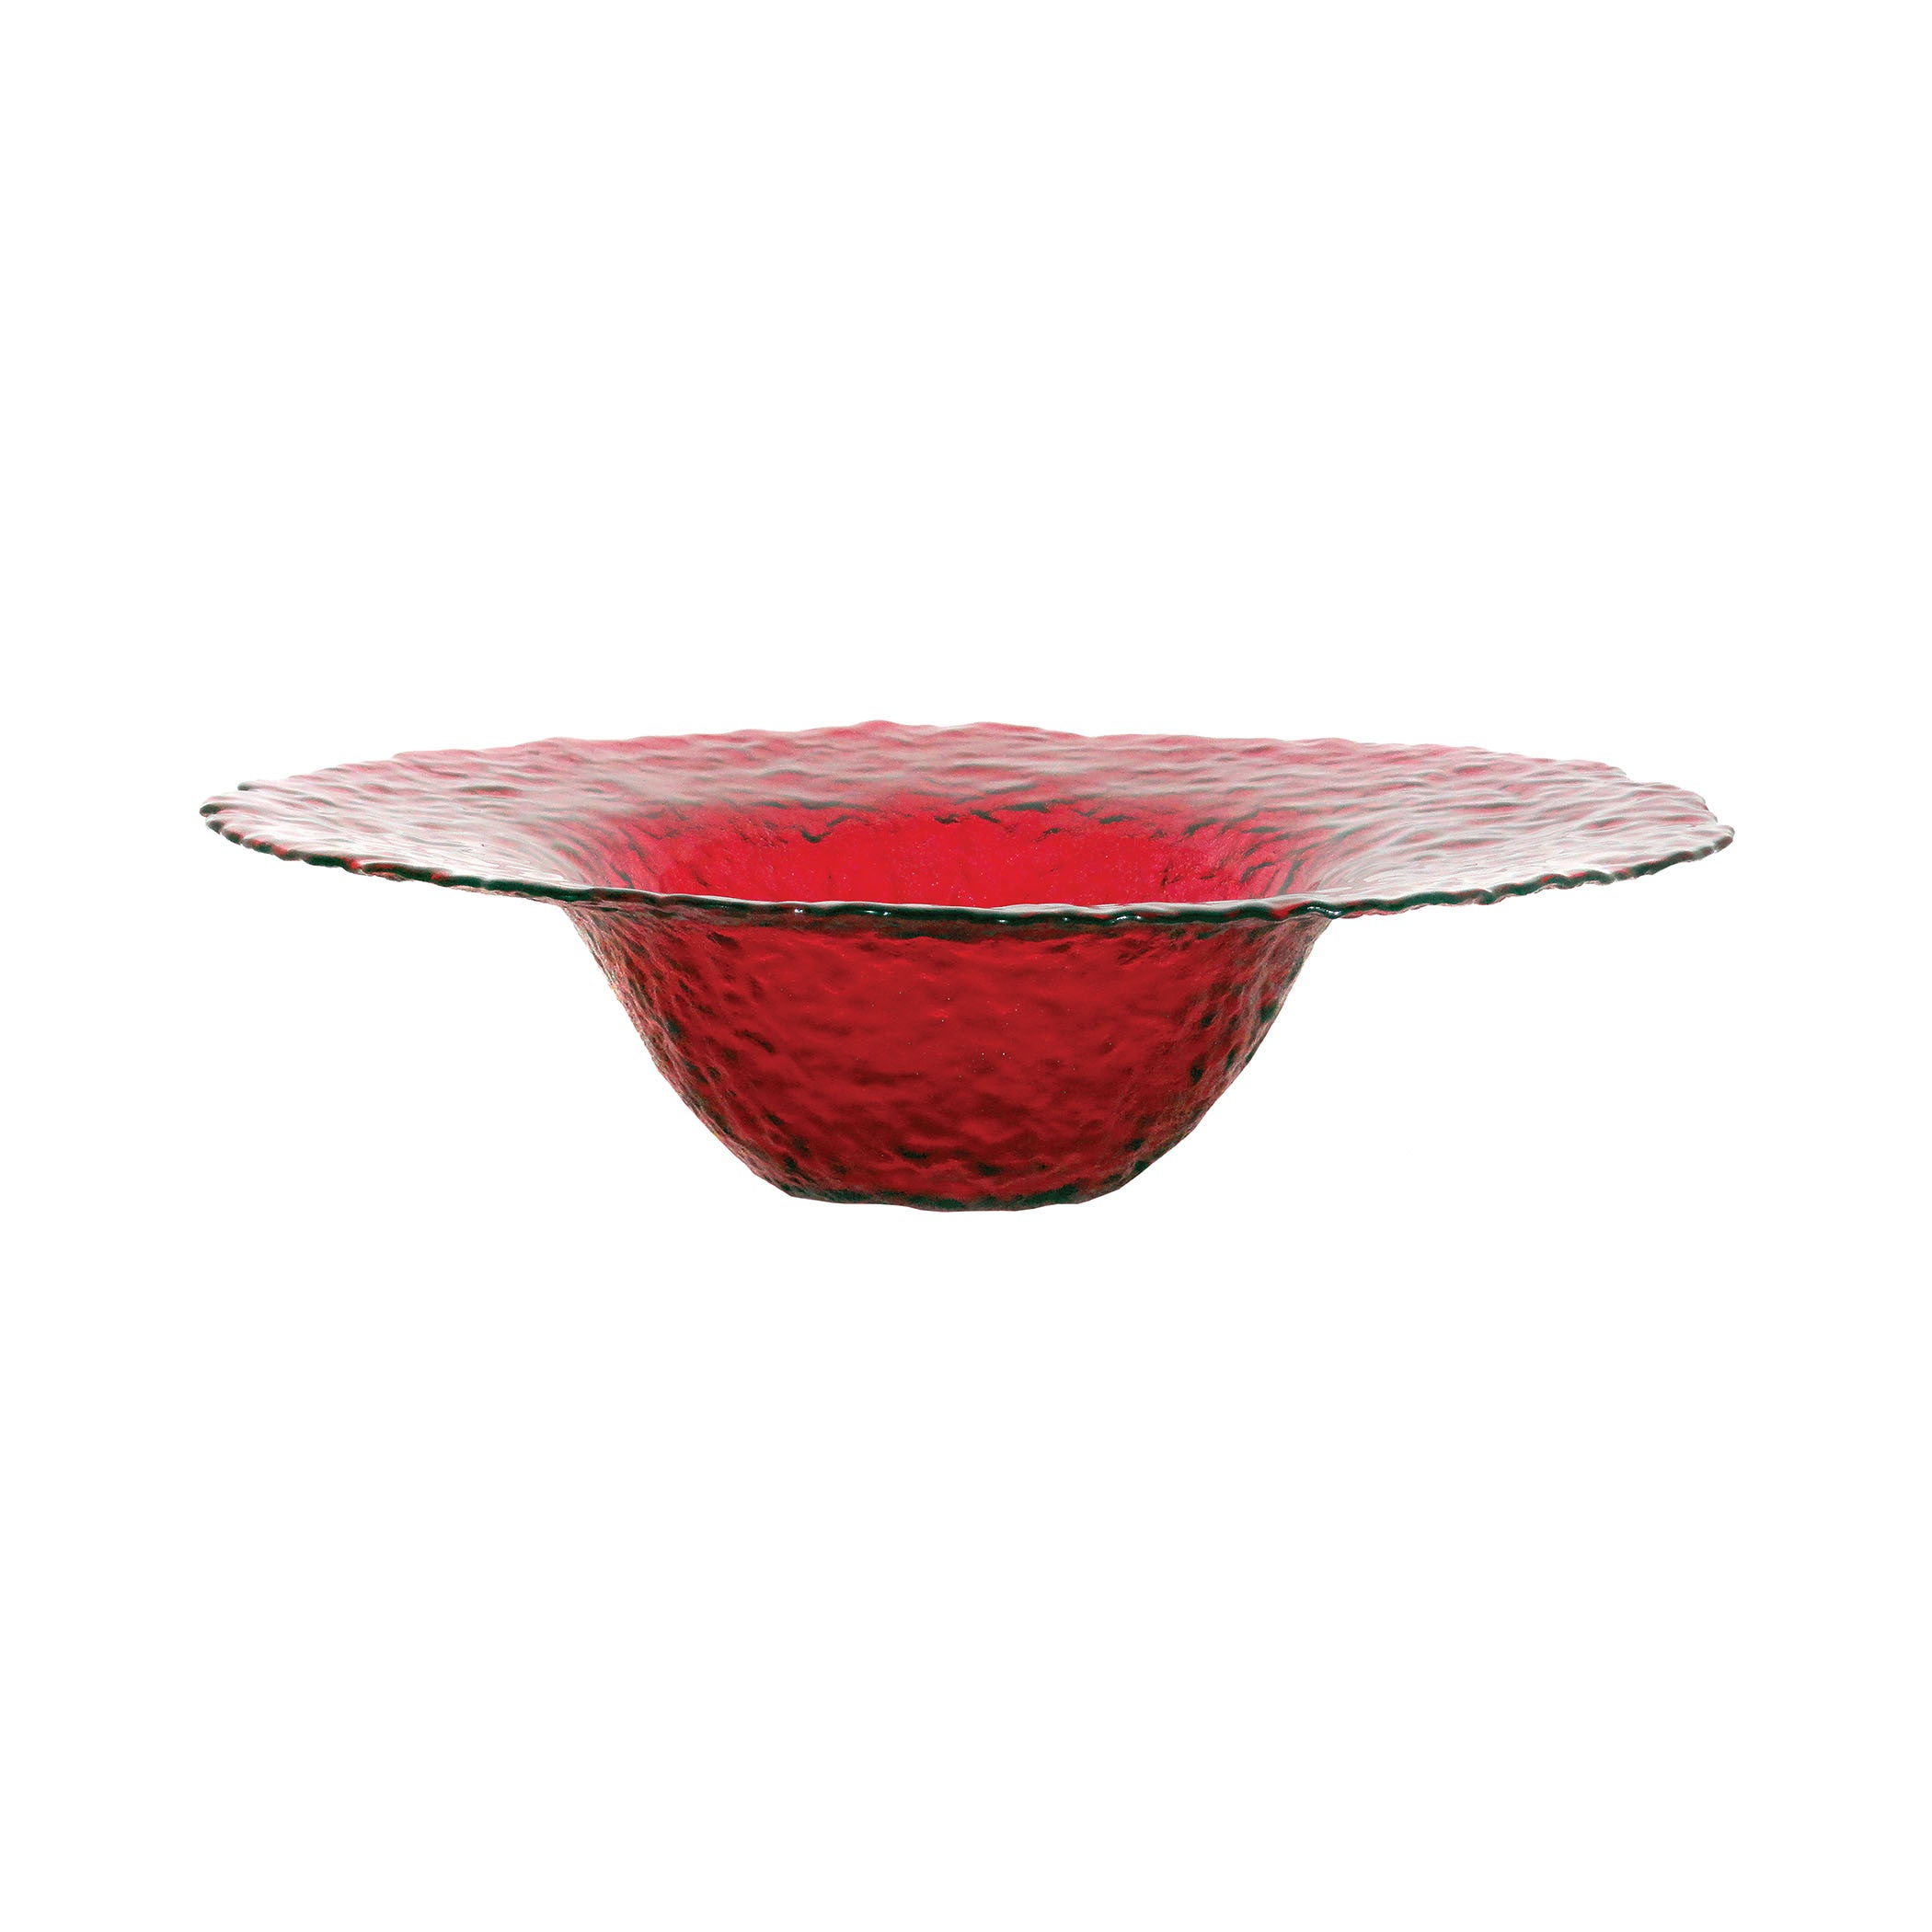 Pomeroy Pom-304644 Bonnet Collection Red Finish Bowl